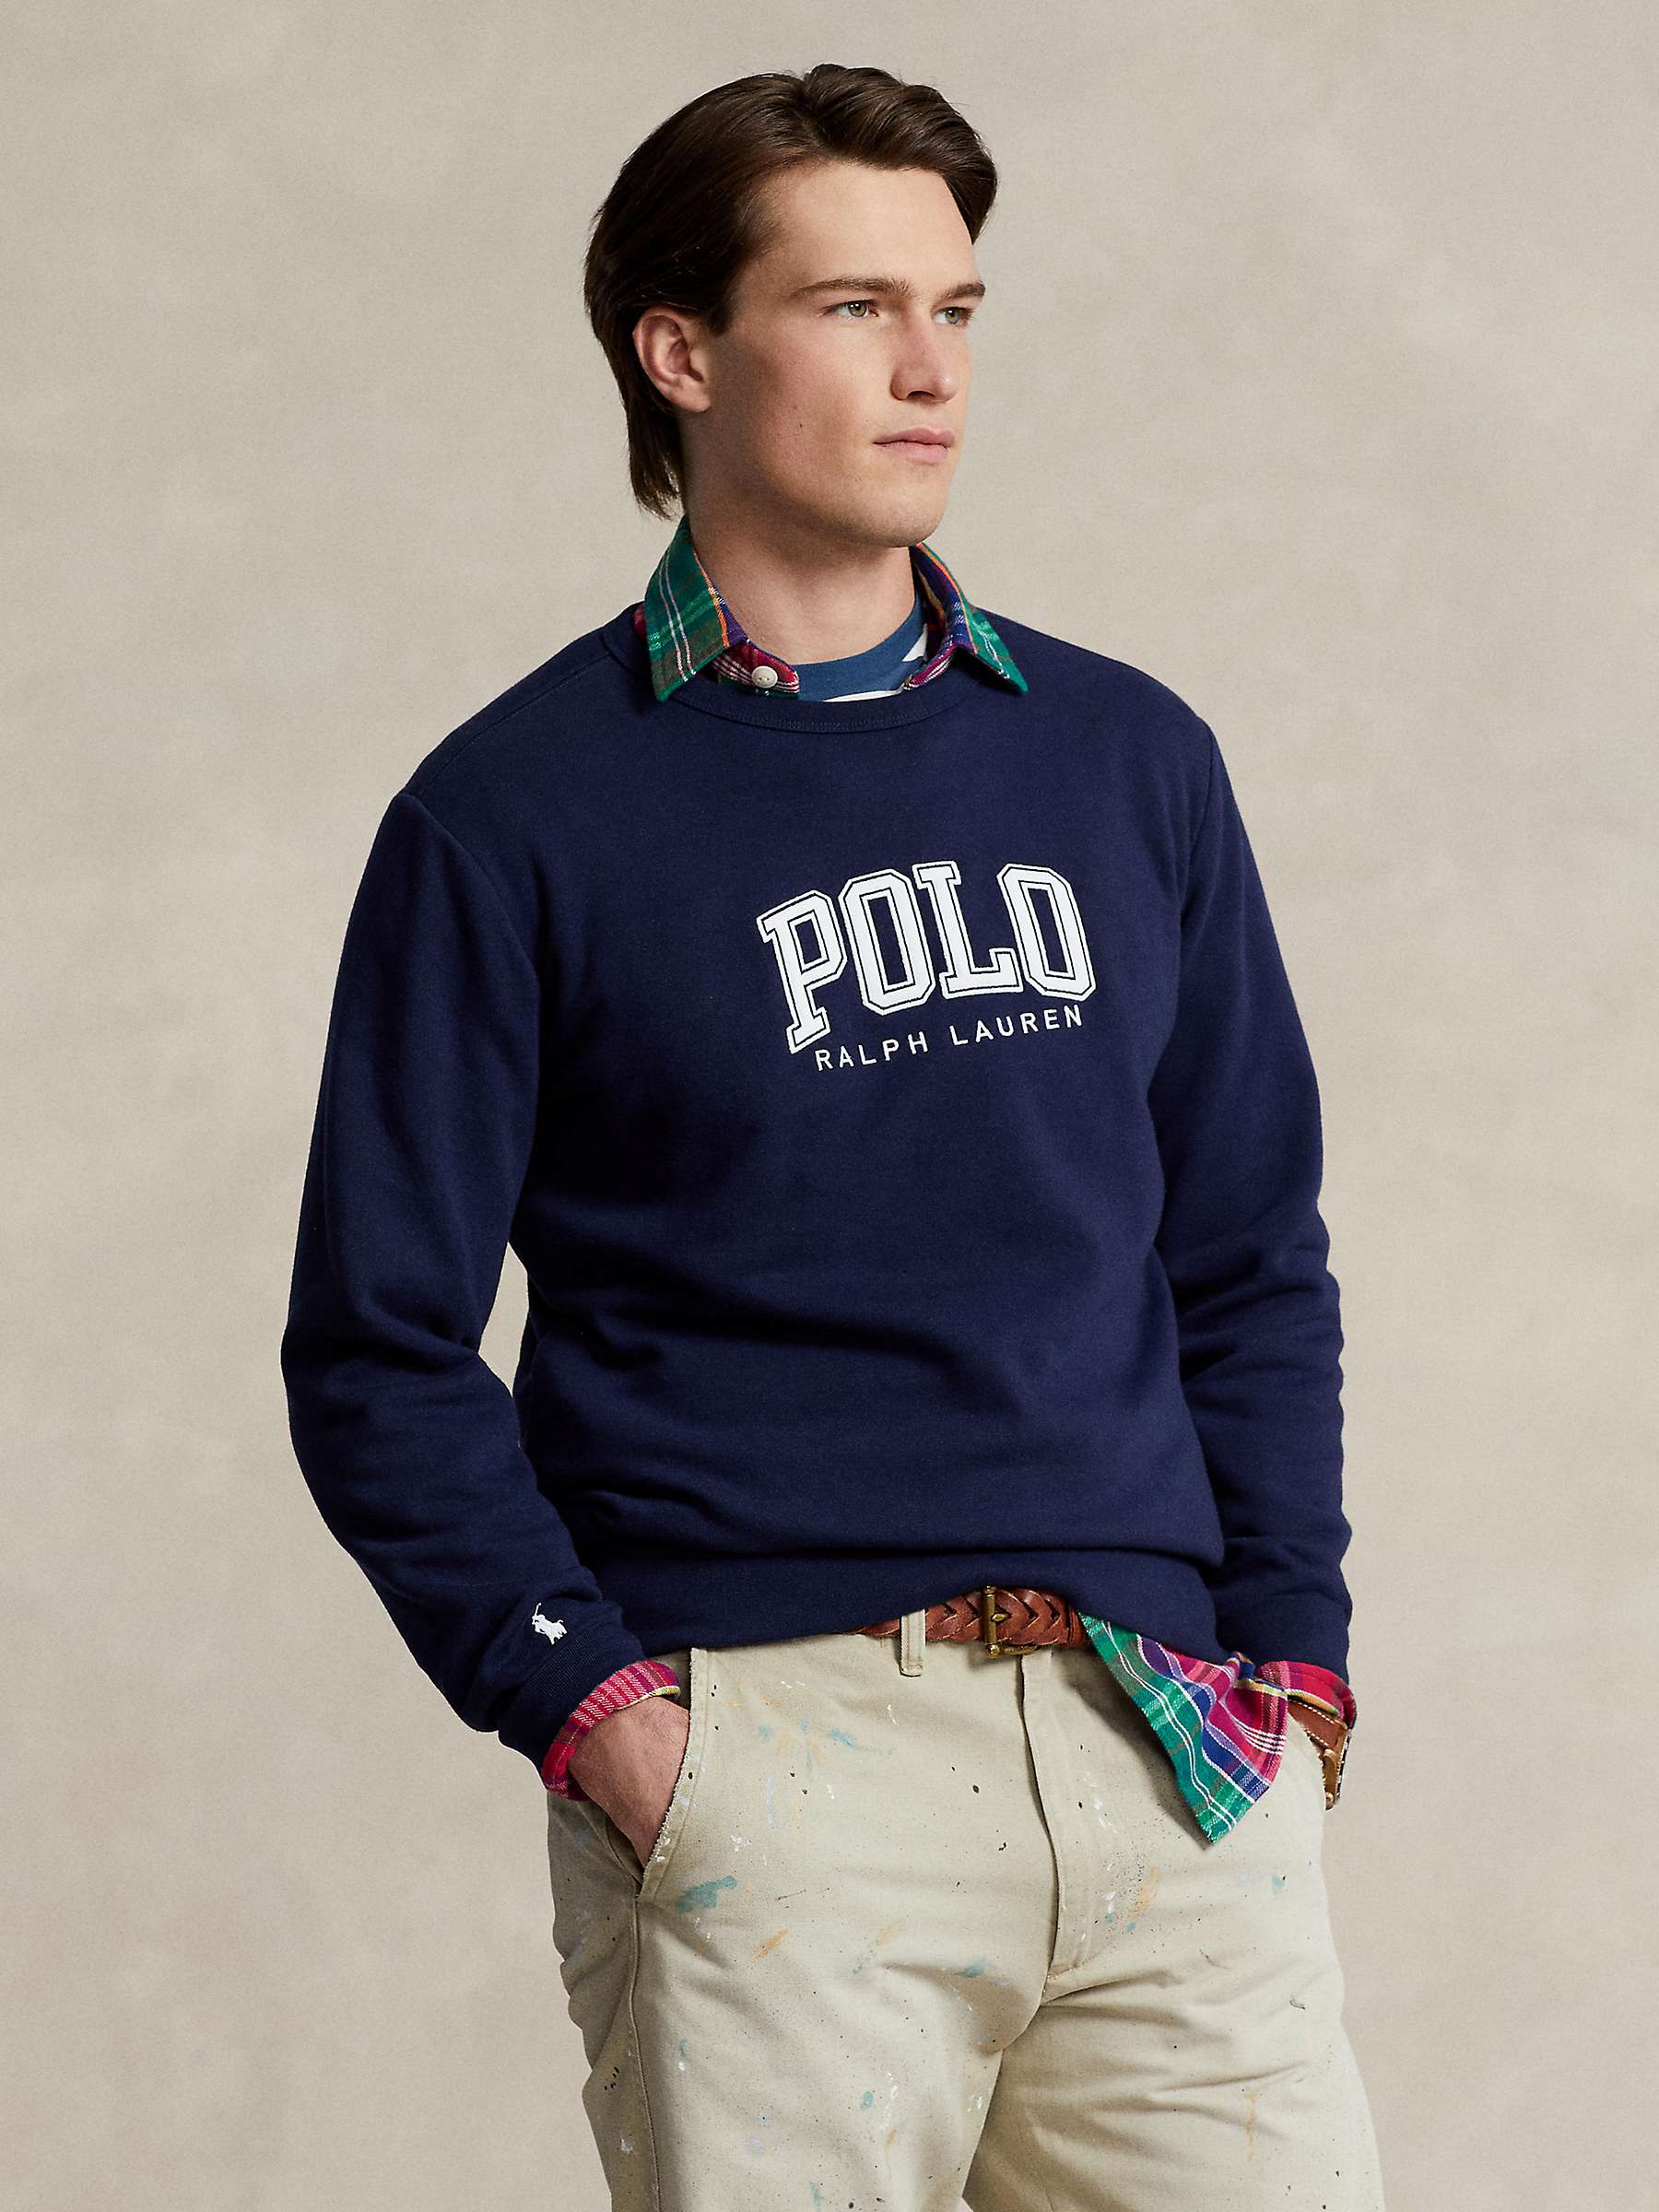 Buy Ralph Lauren Polo Logo Embroidered Sweatshirt, Cruise Navy Online at johnlewis.com